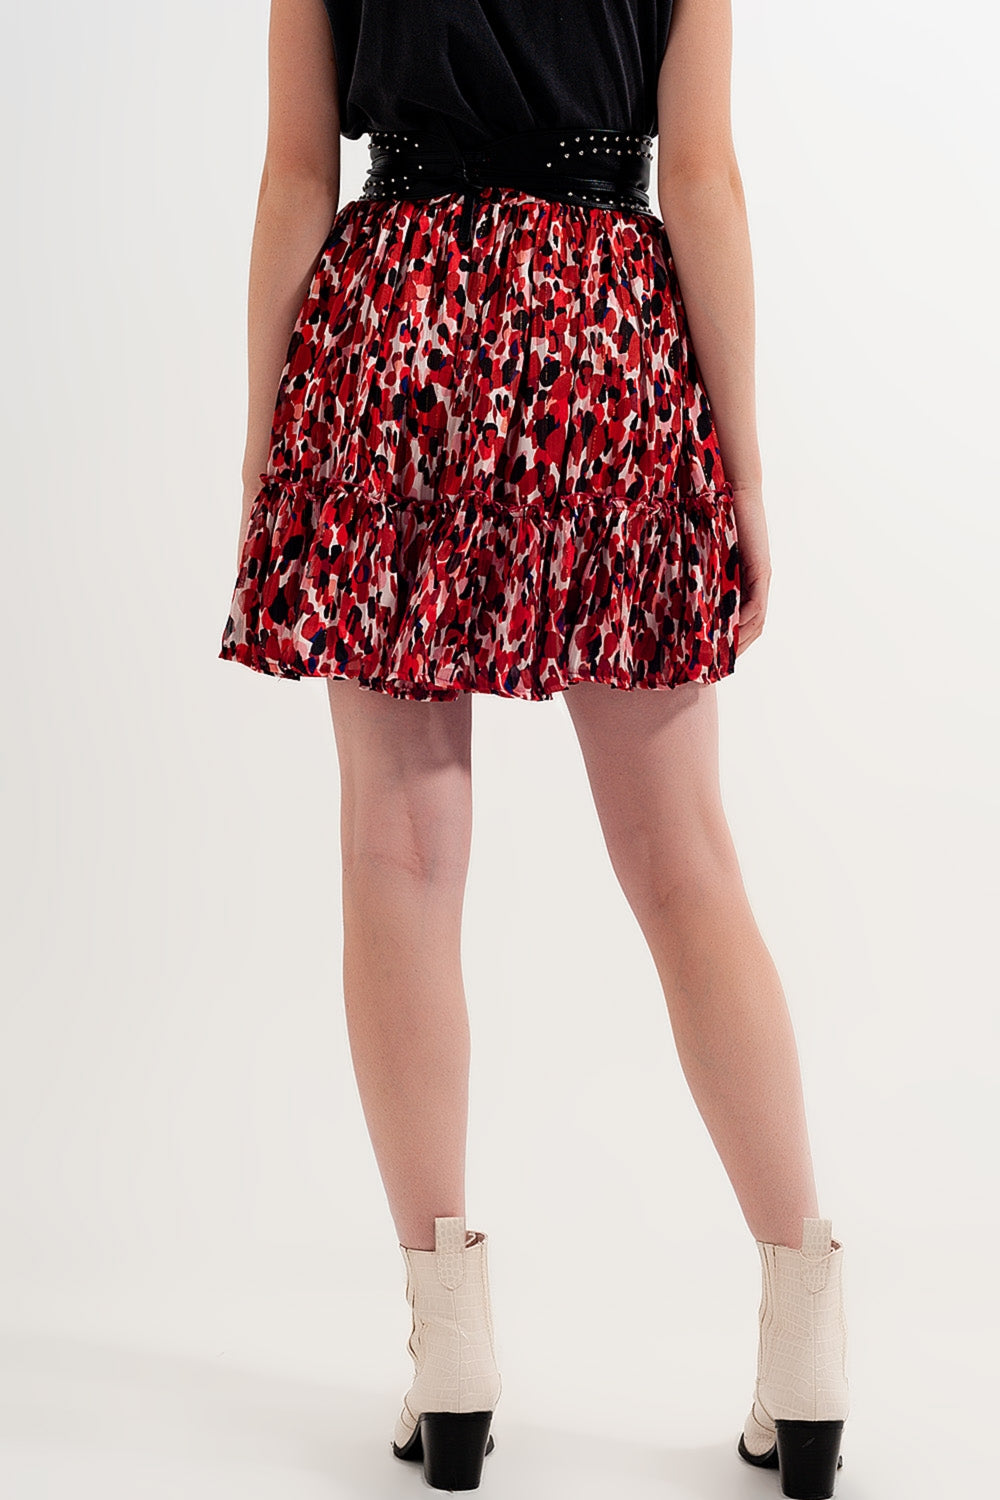 Ruffle mini skirt in animal print Szua Store